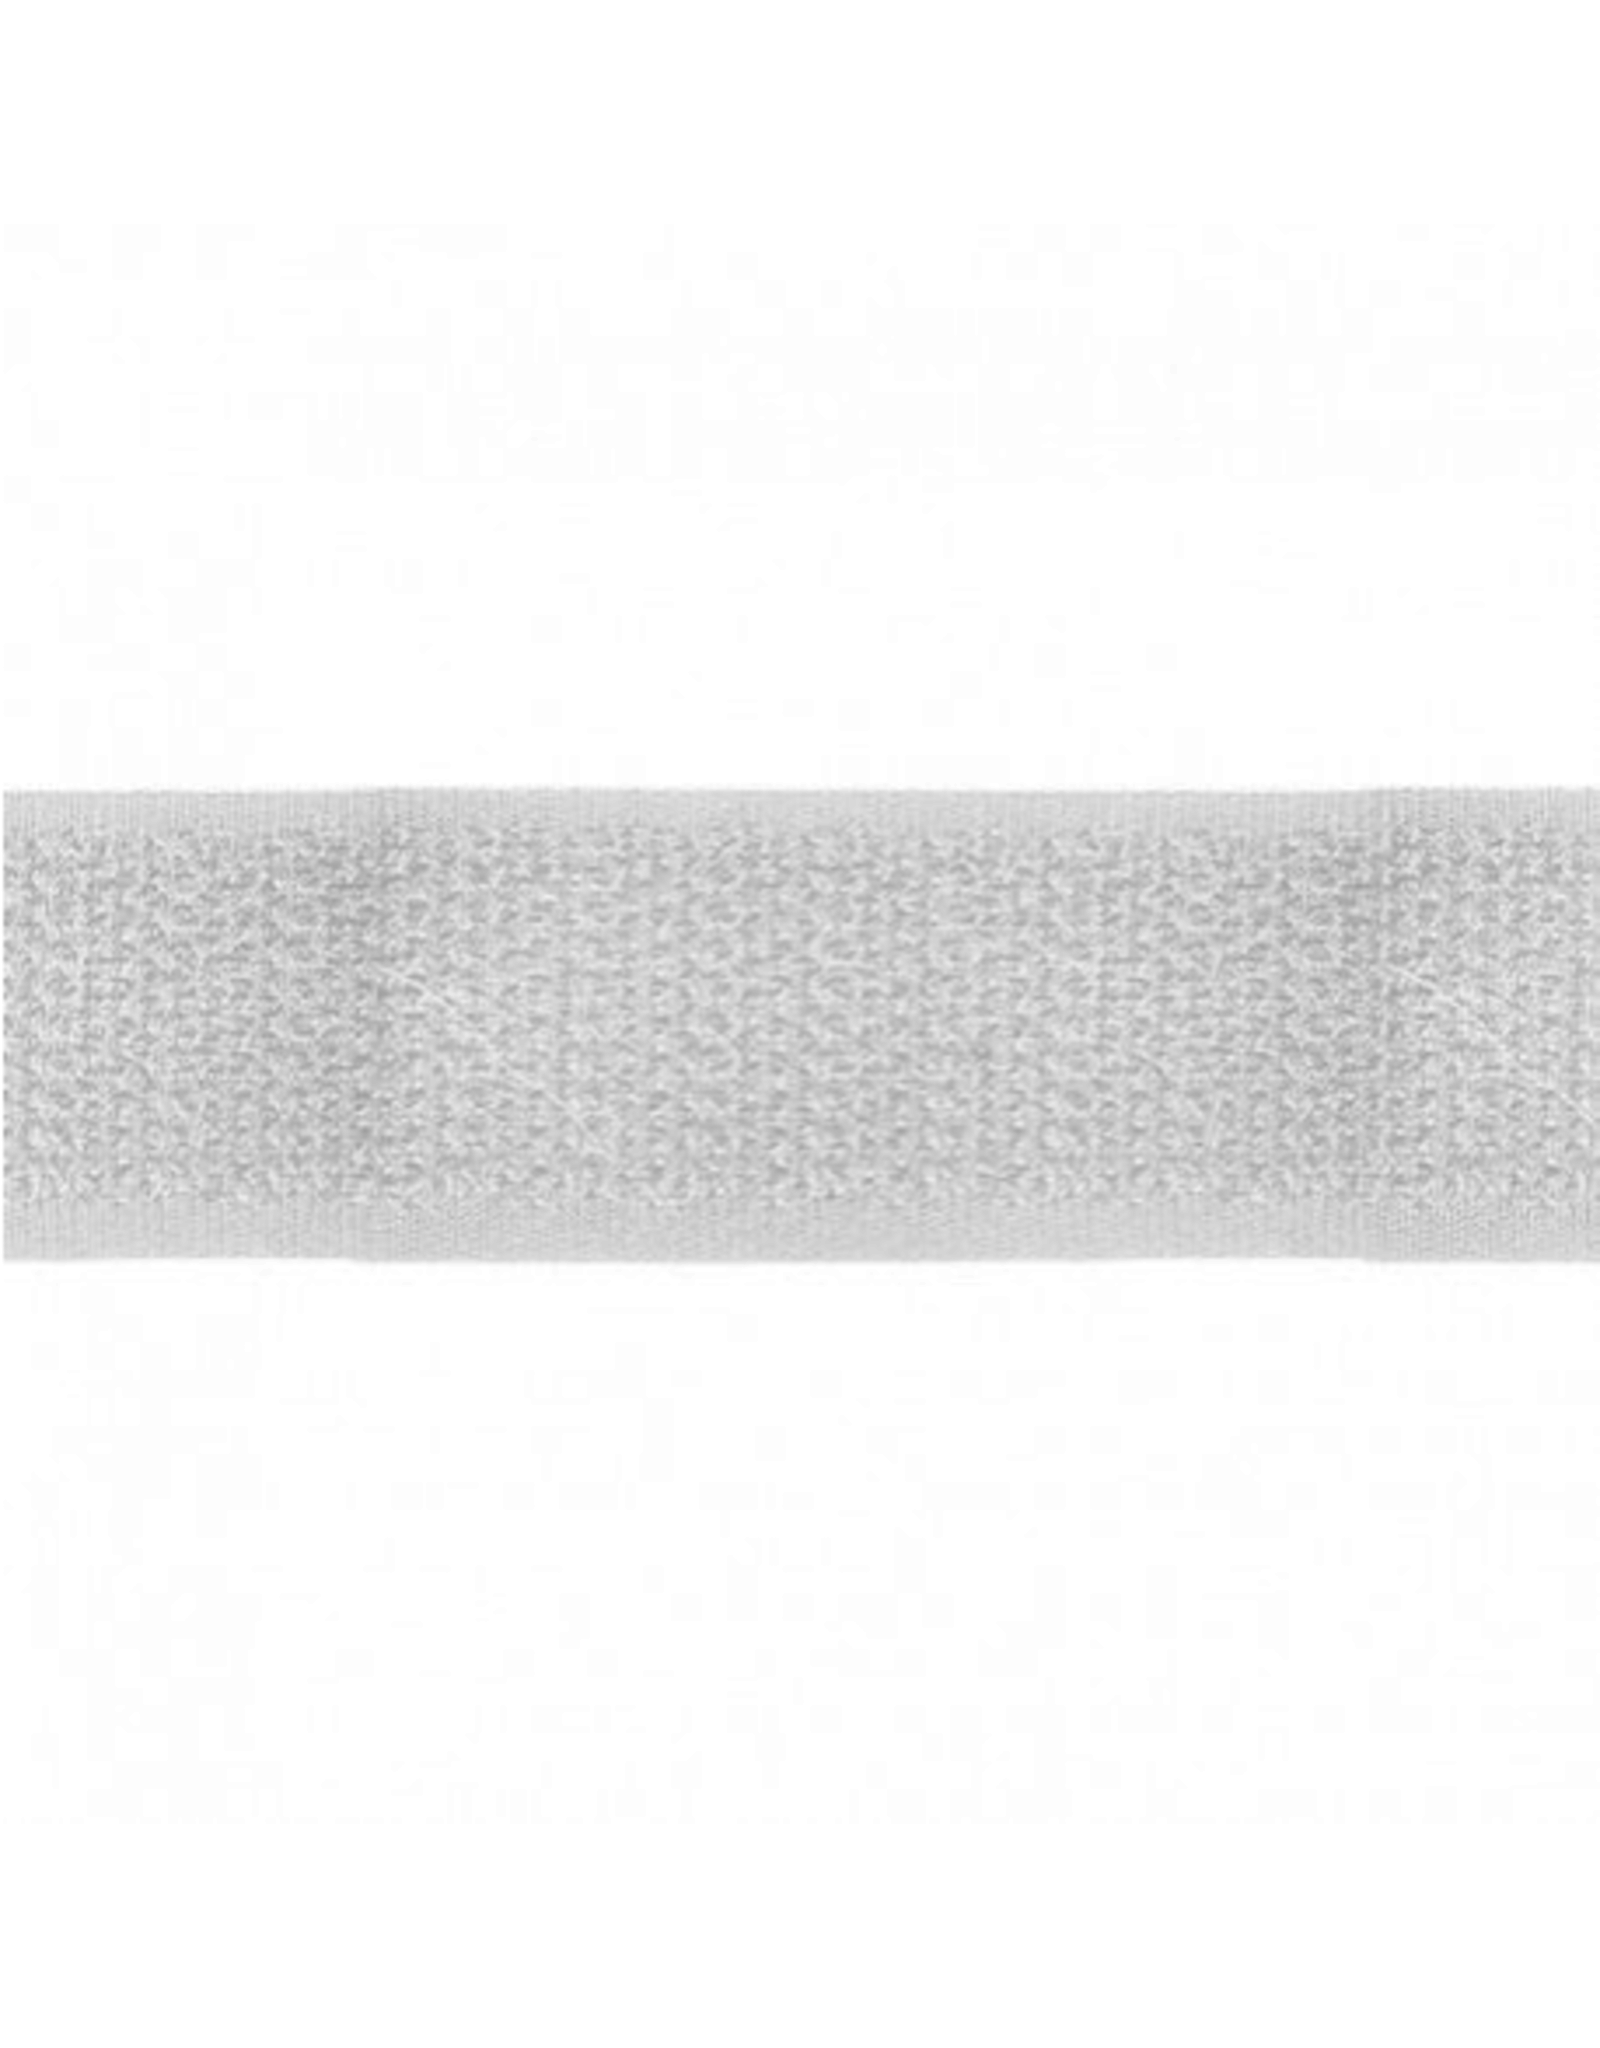 Stéphanoise Velcro zelfklevend haak 2.5cm wit